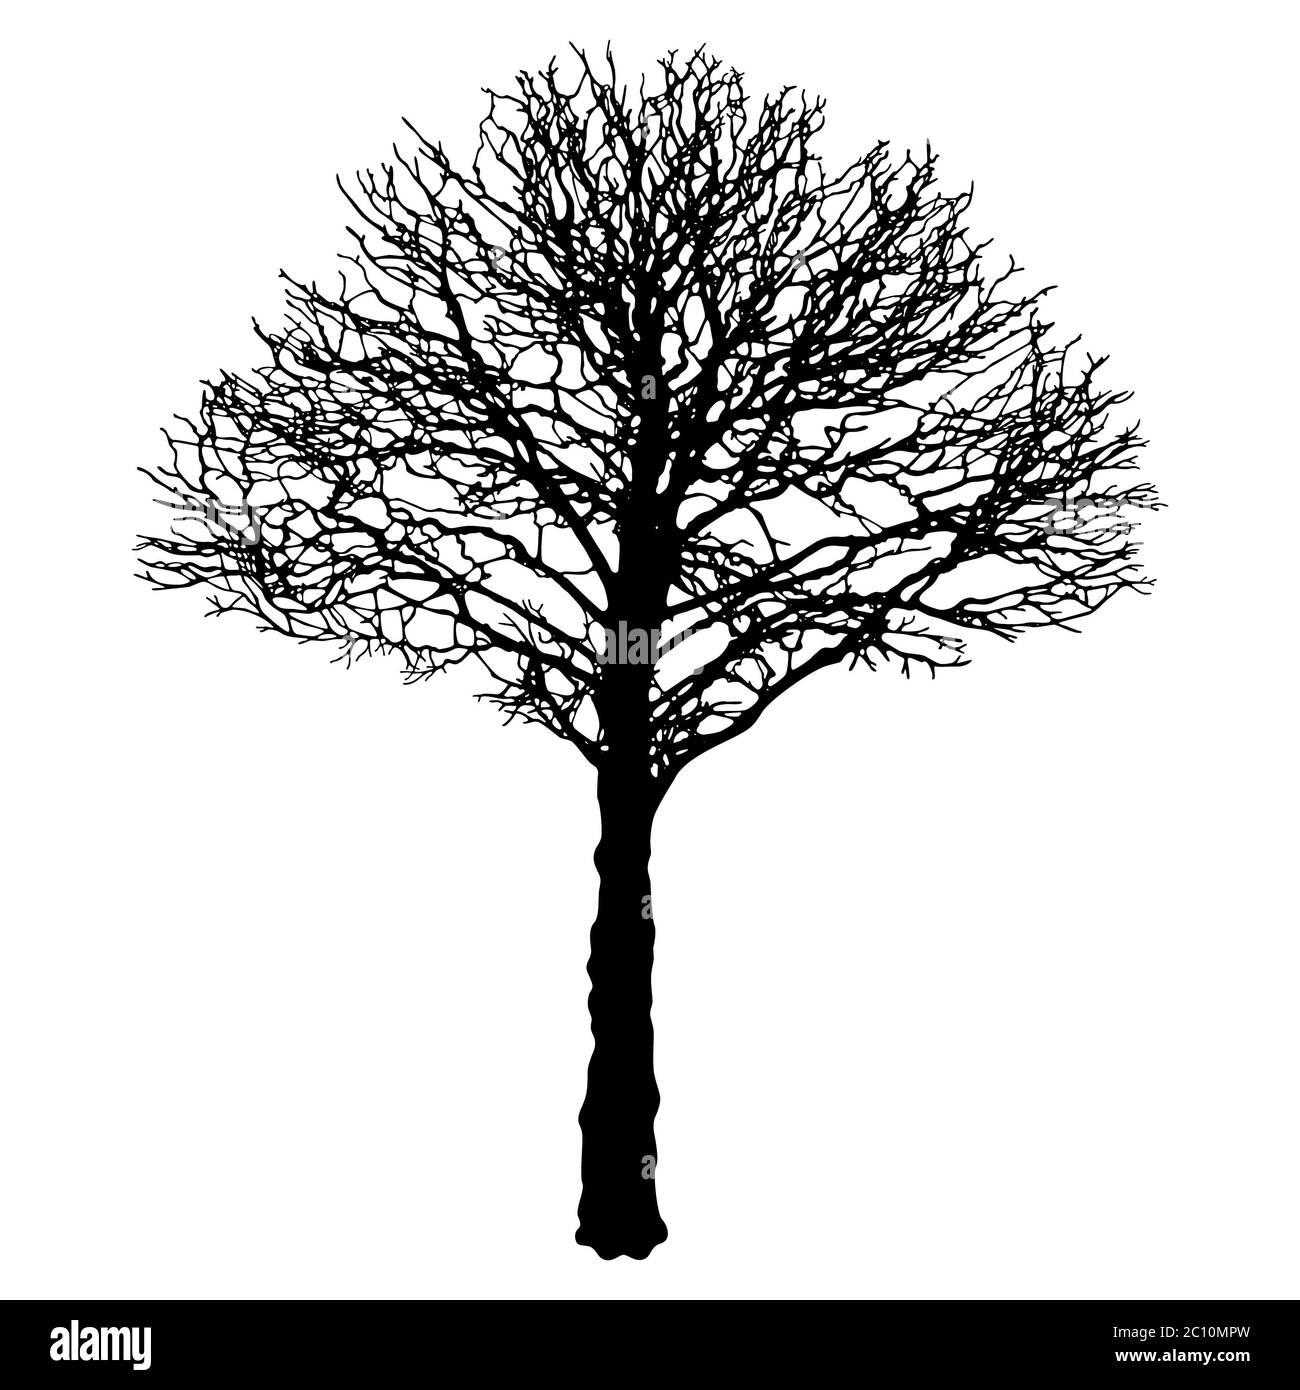 Vector image of black urban tree contour - linden Tilia cordata Stock Photo